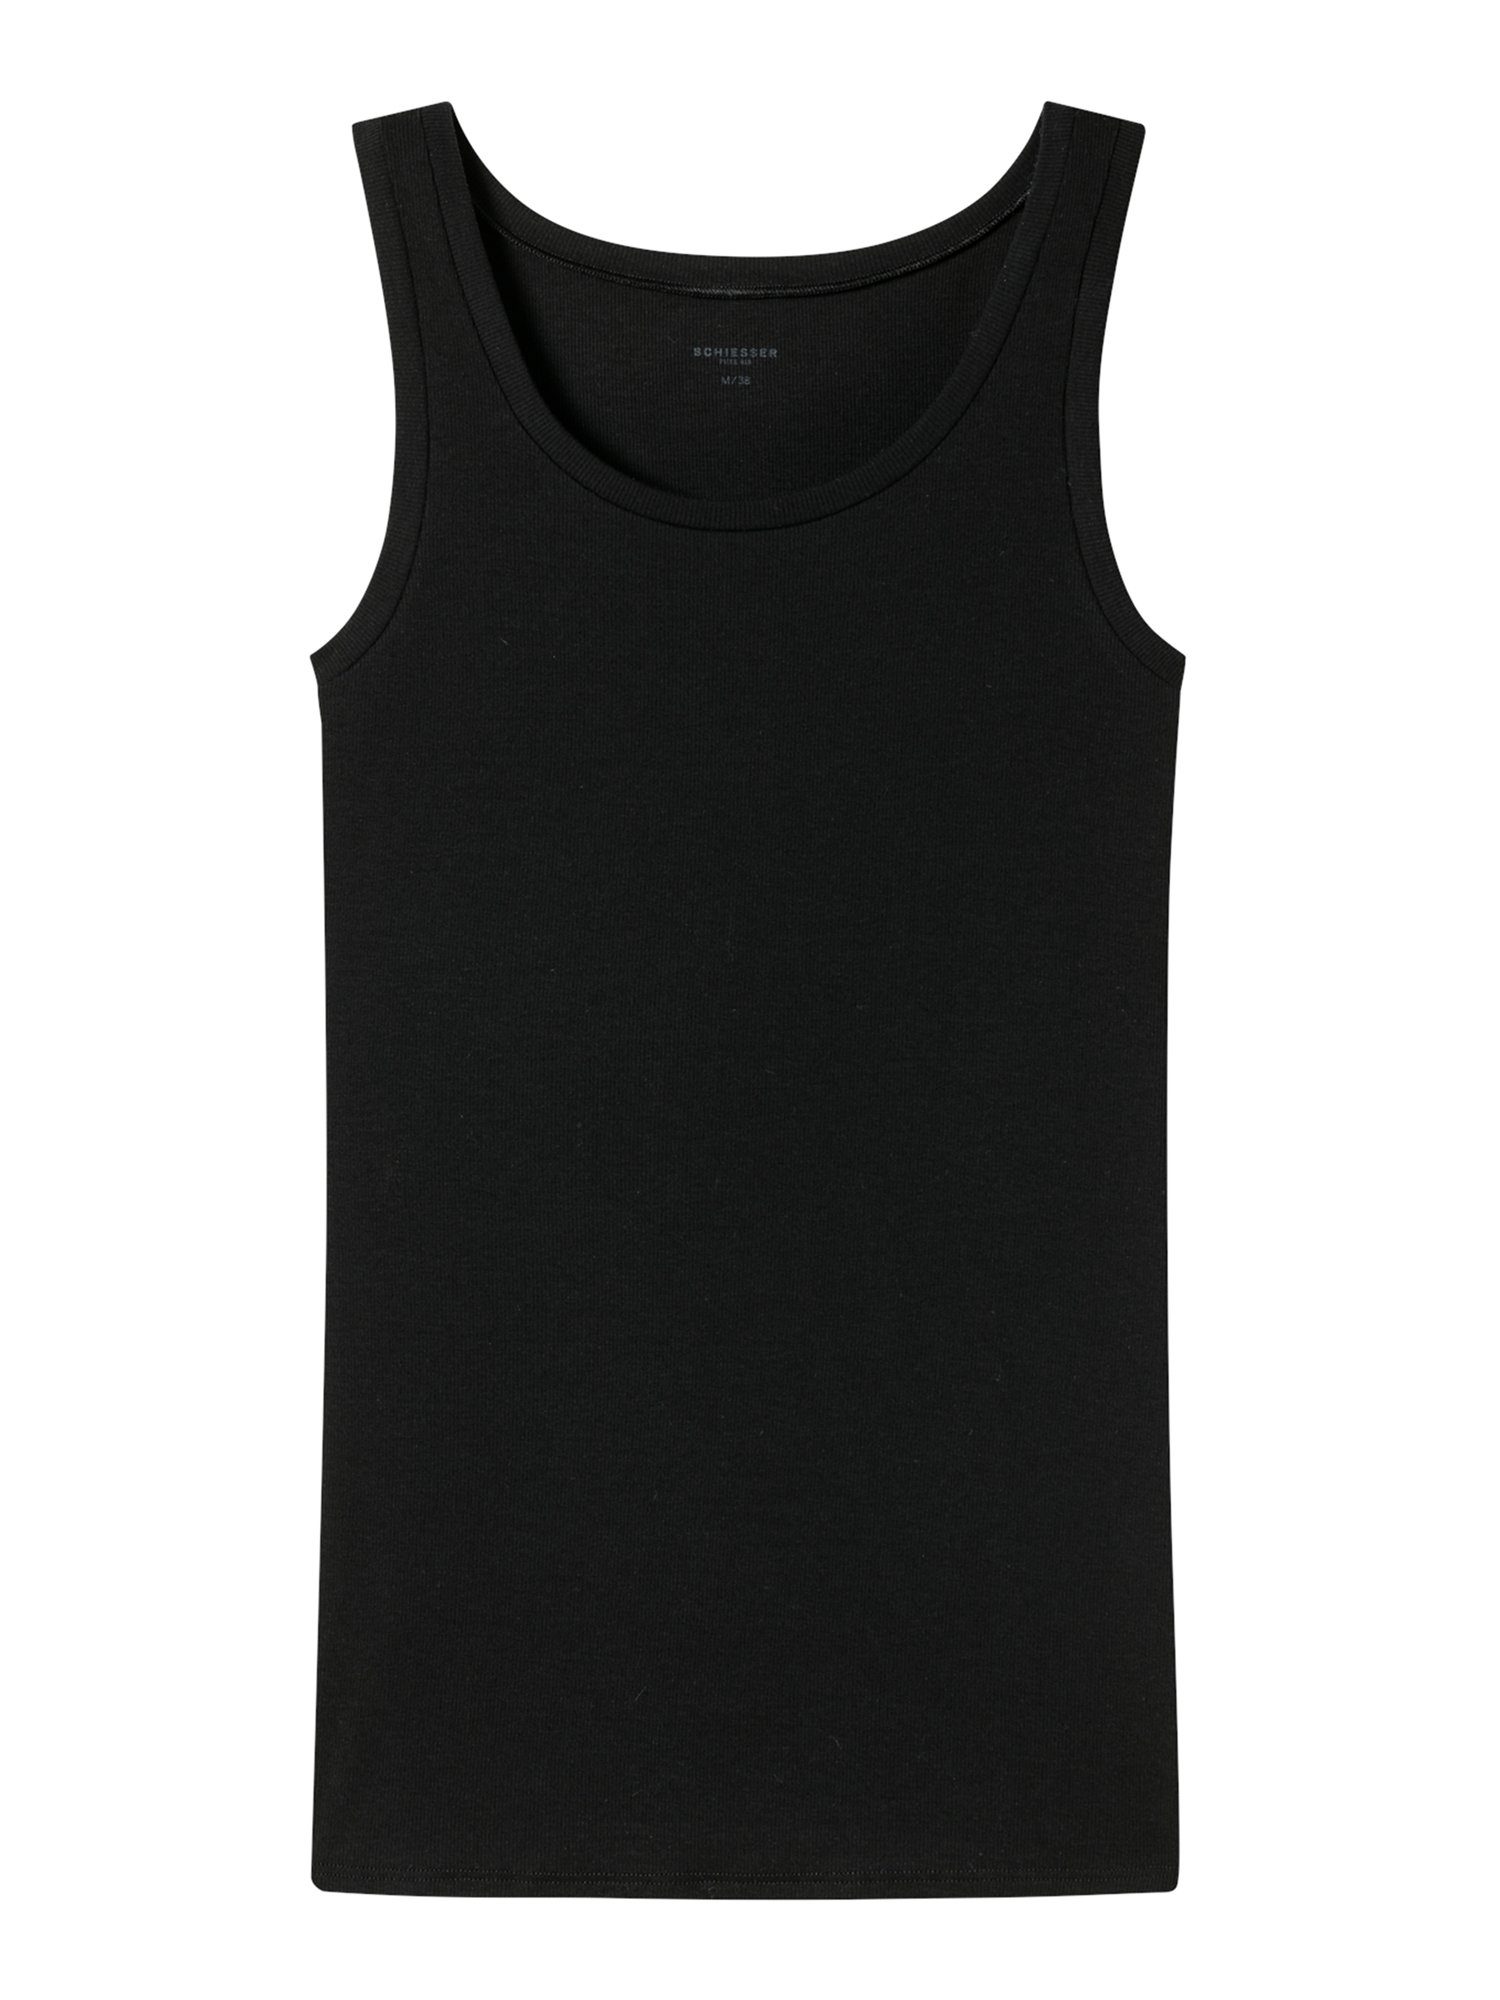 Schiesser Tanktop Tank-top Rib Pure unterhemd schwarz unterzieh-shirt